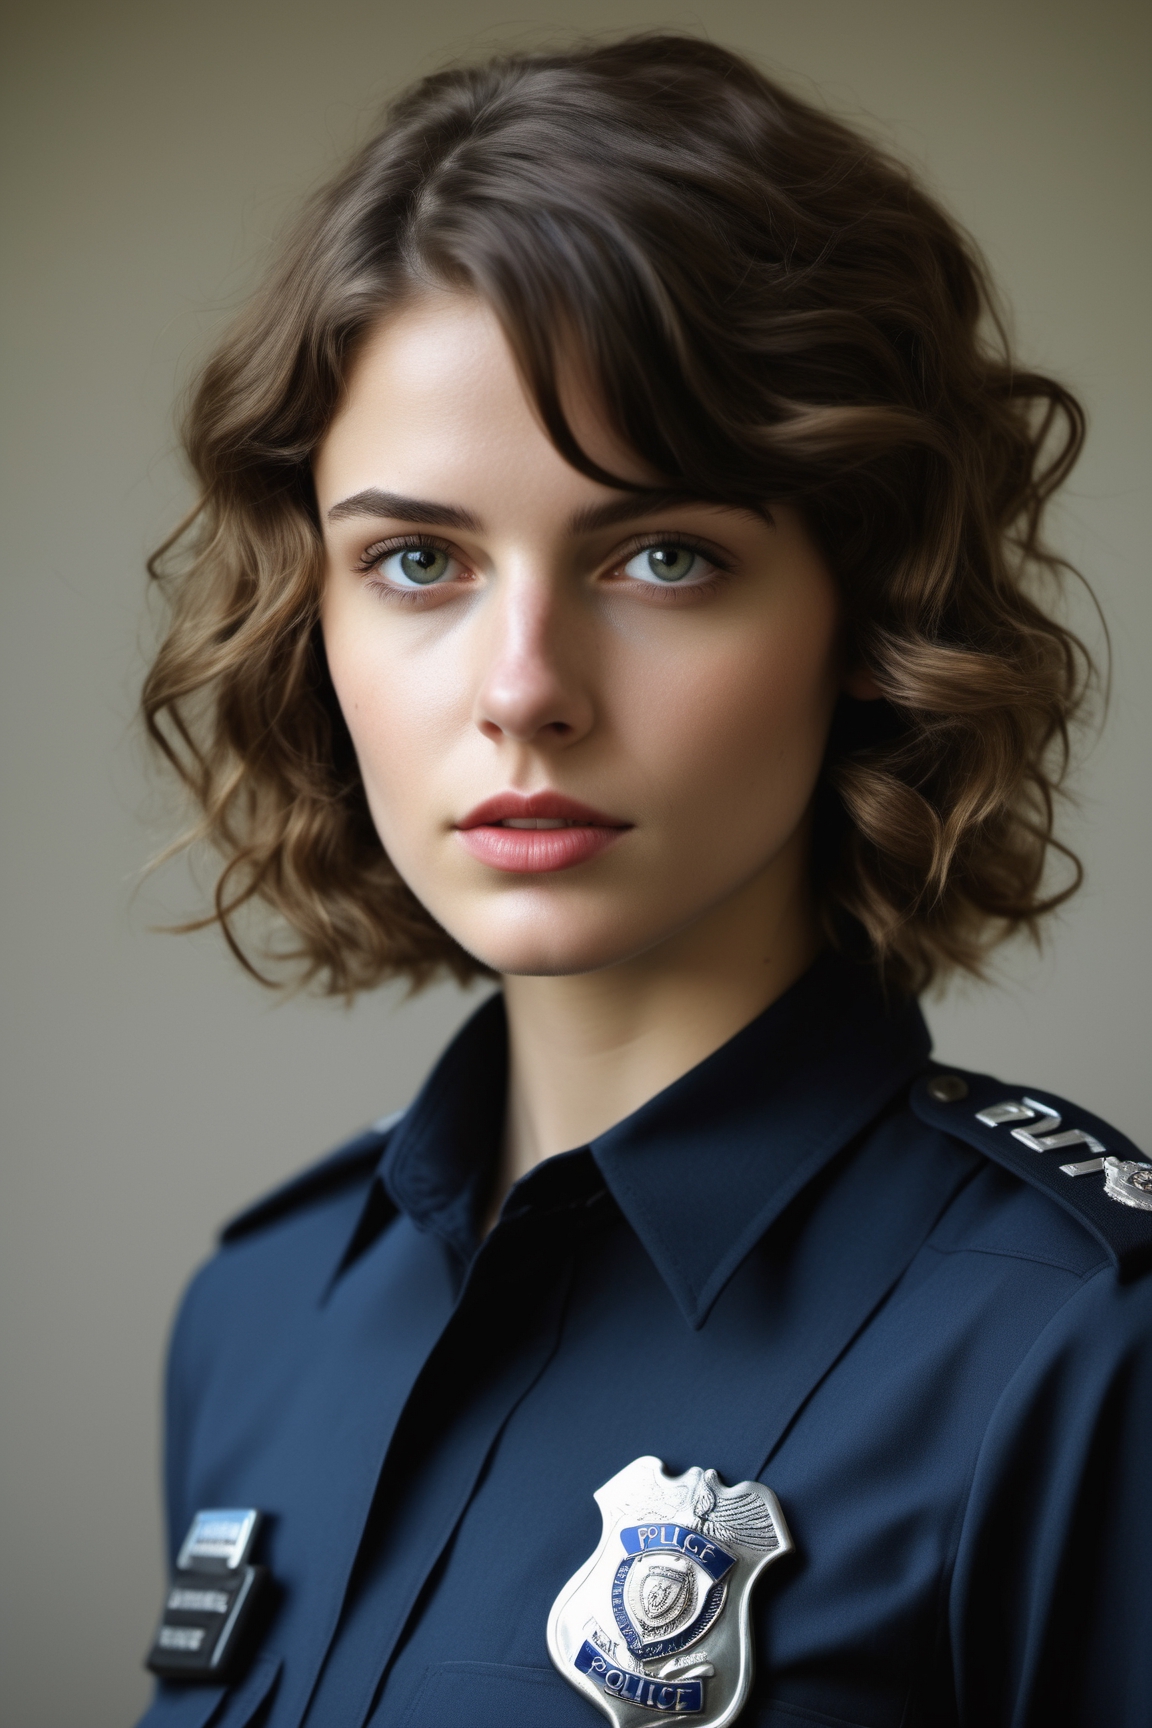 Beautiful Police Woman Tensorart 